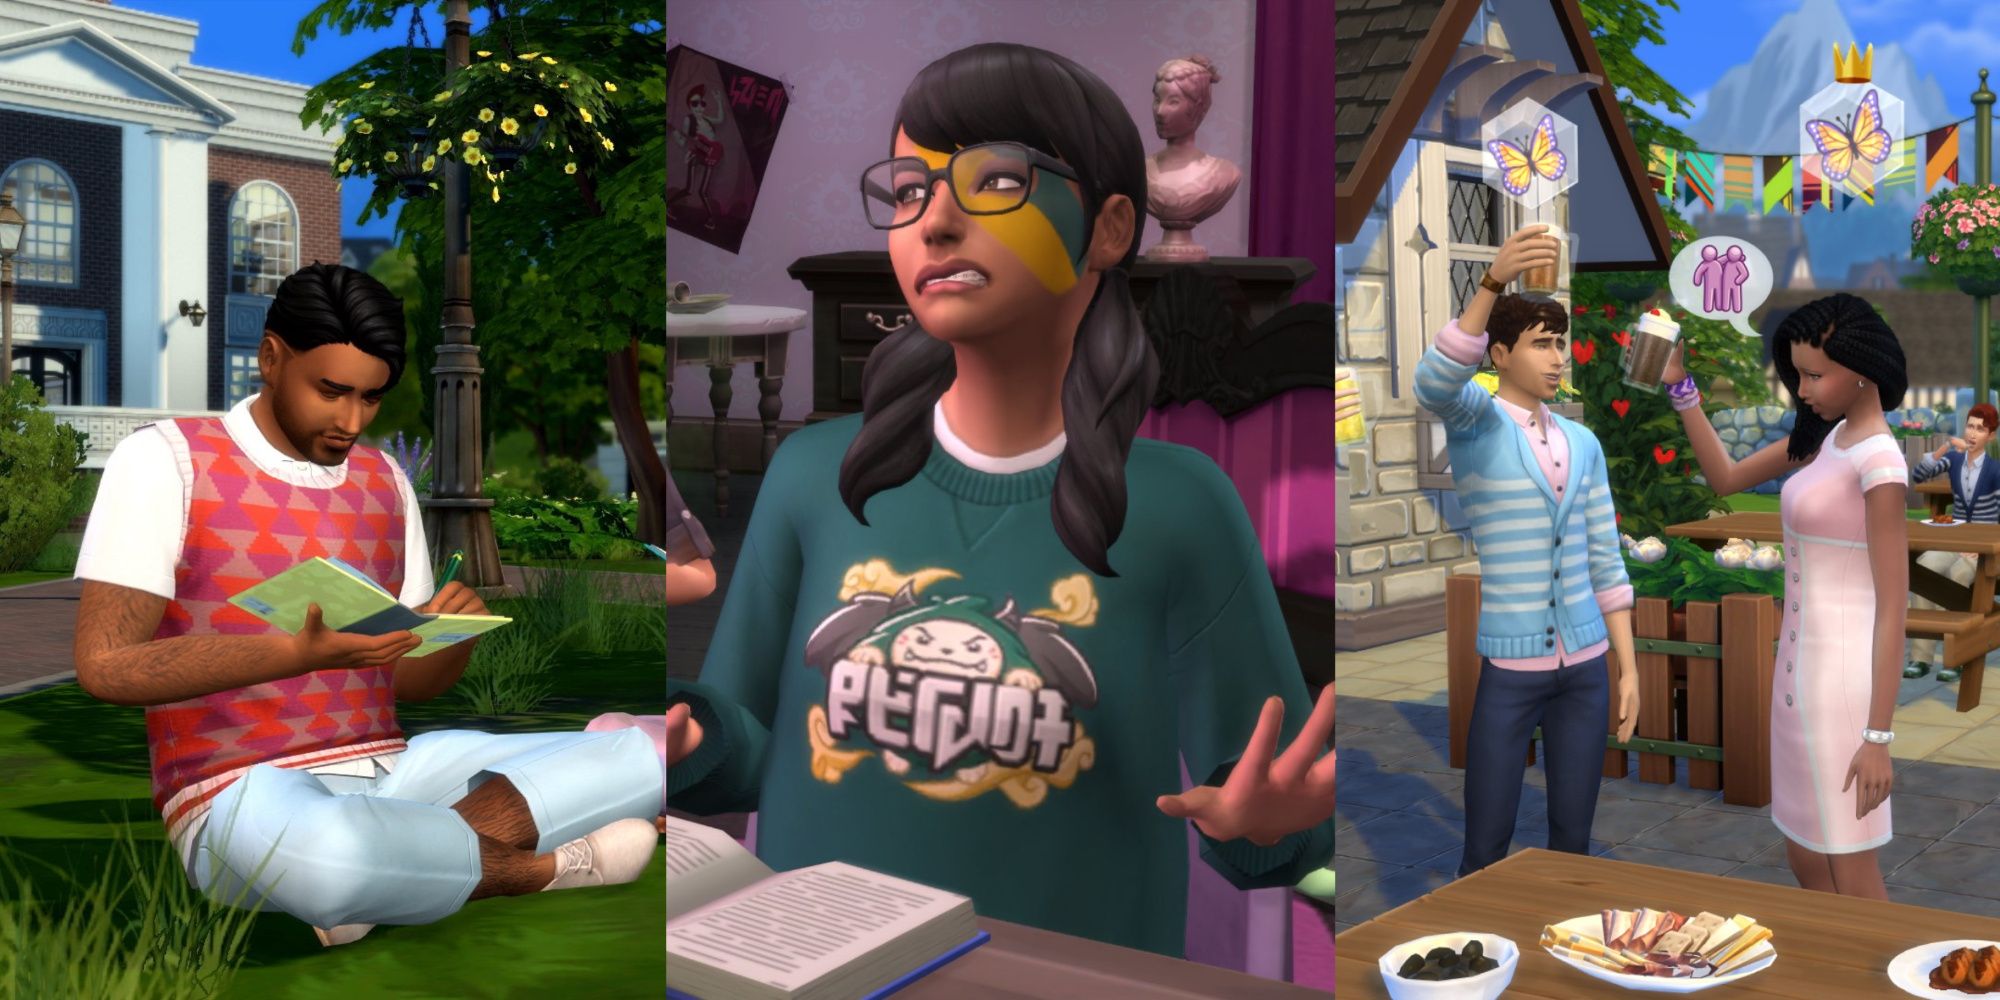 Teenage Sim gameplay in The Sims 4